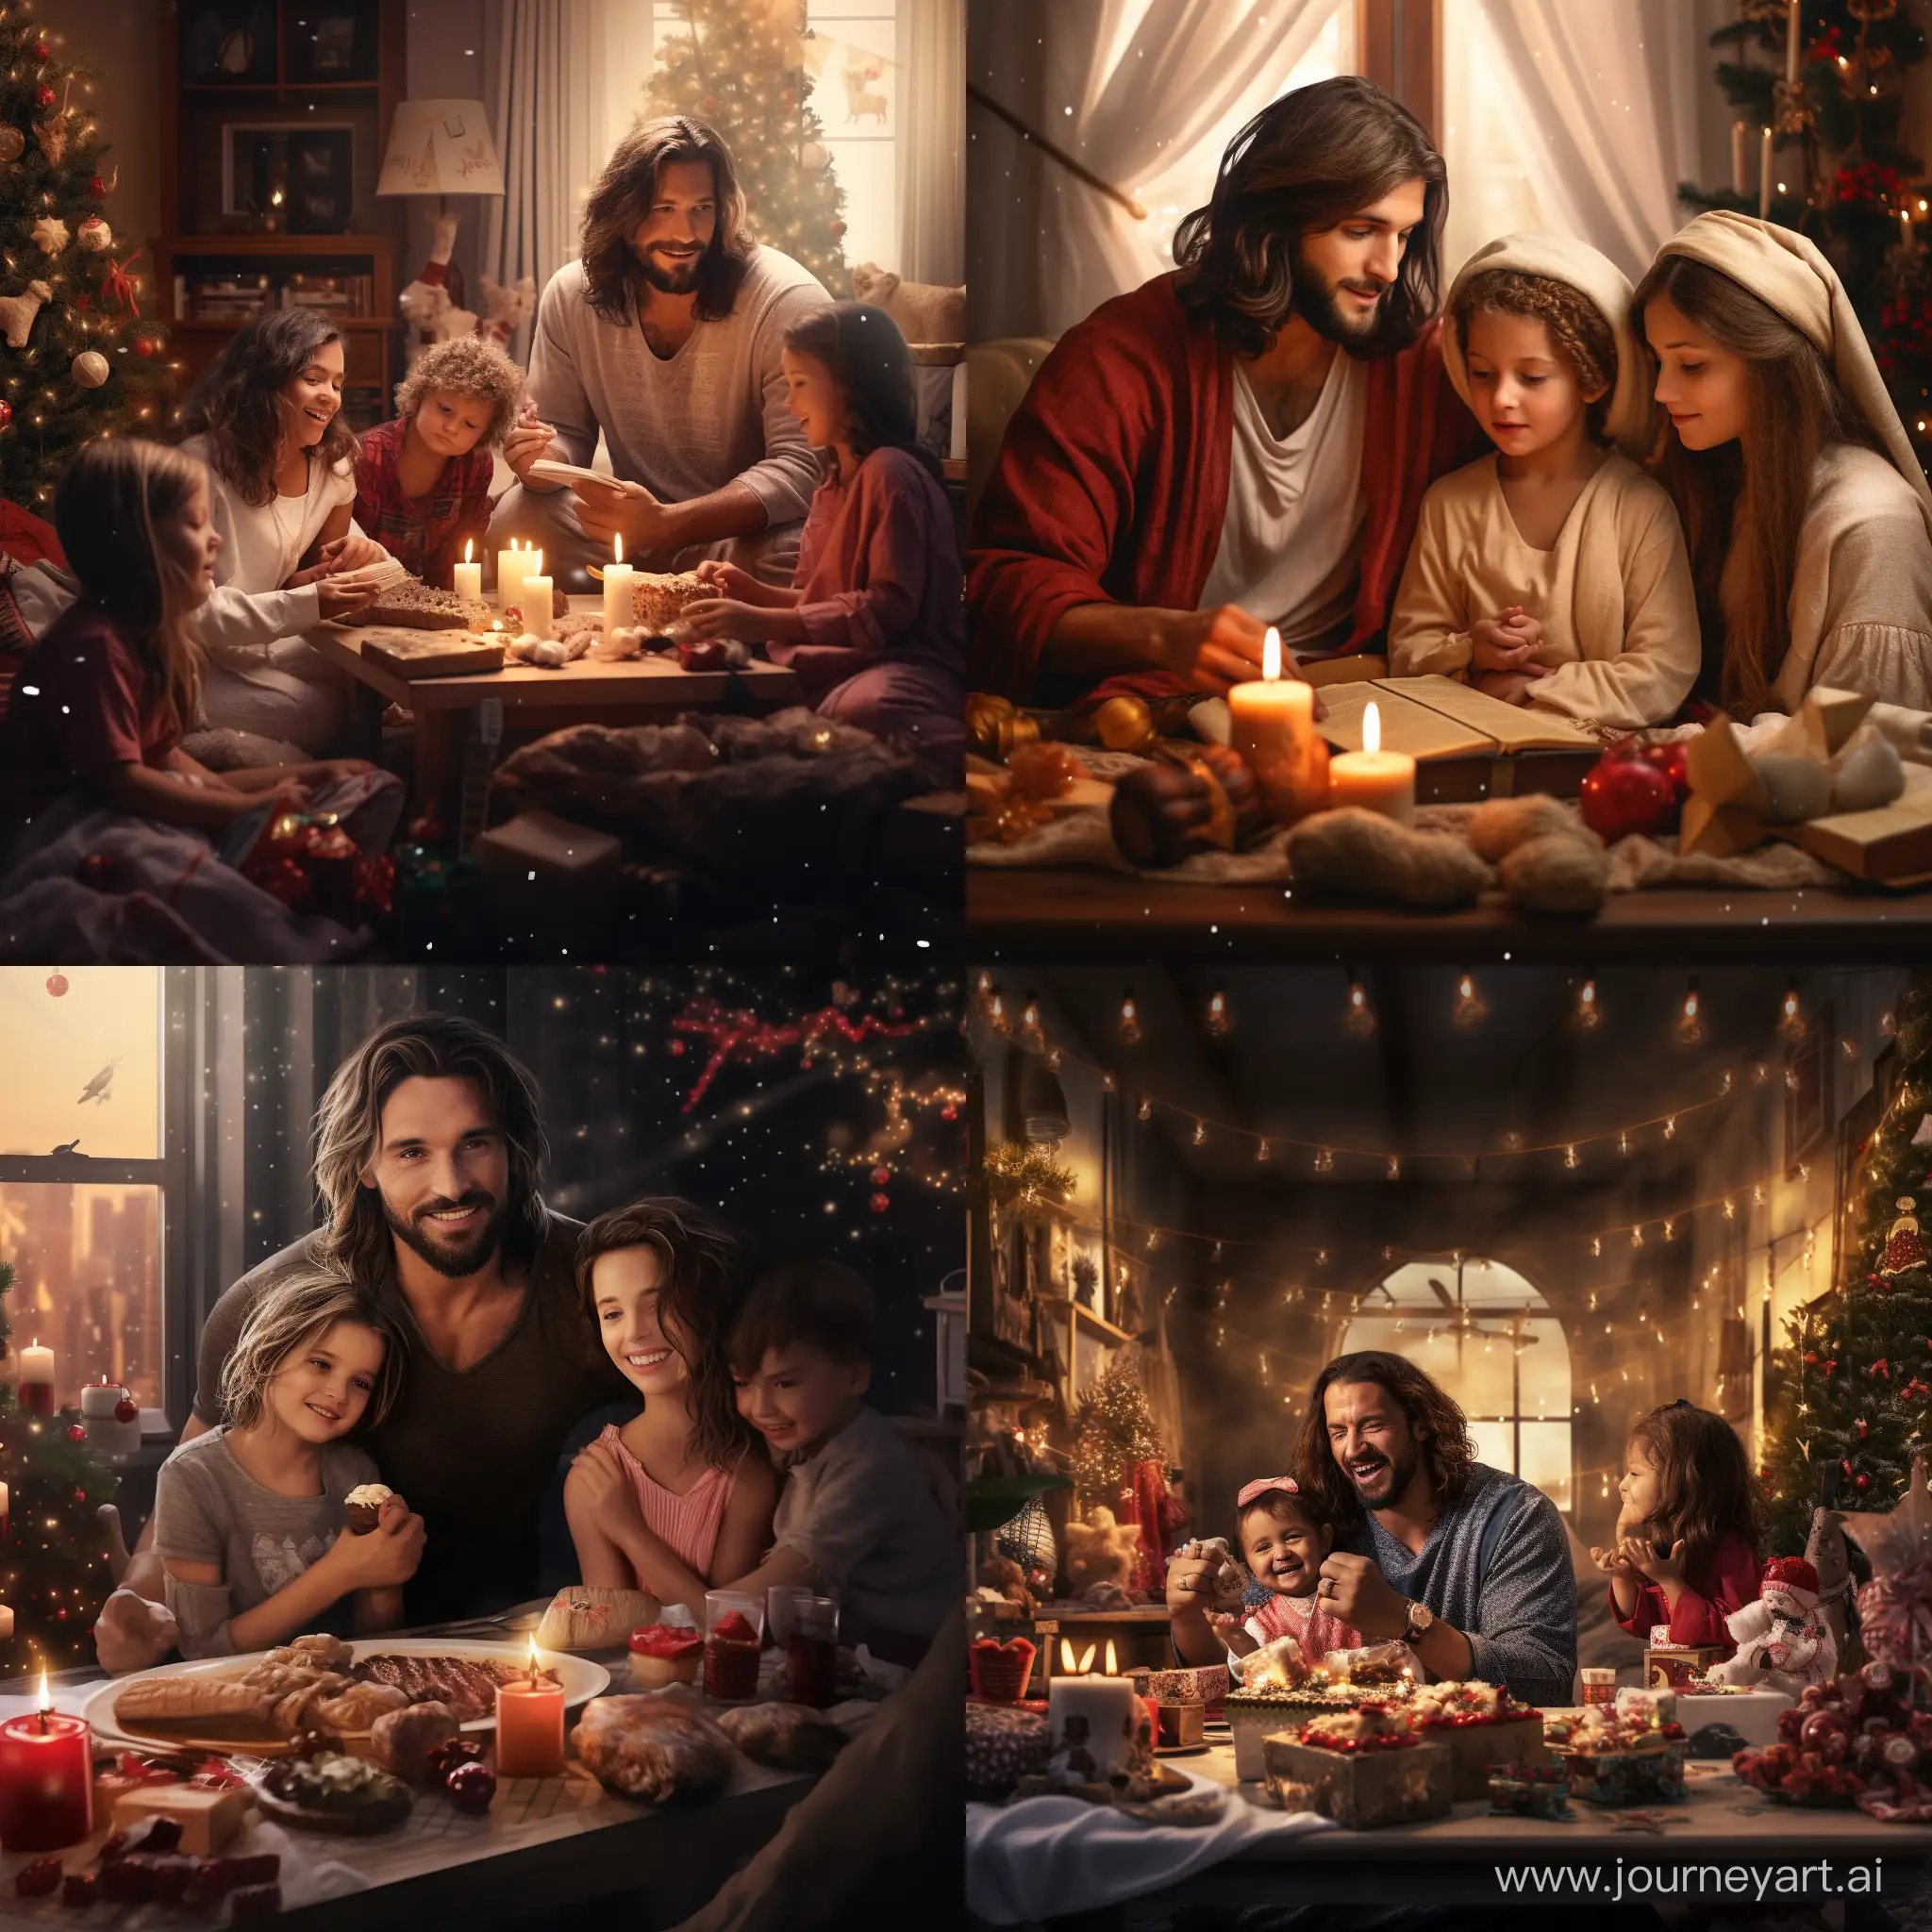 Joyful-Christmas-Celebration-with-Family-and-Jesus-Christ